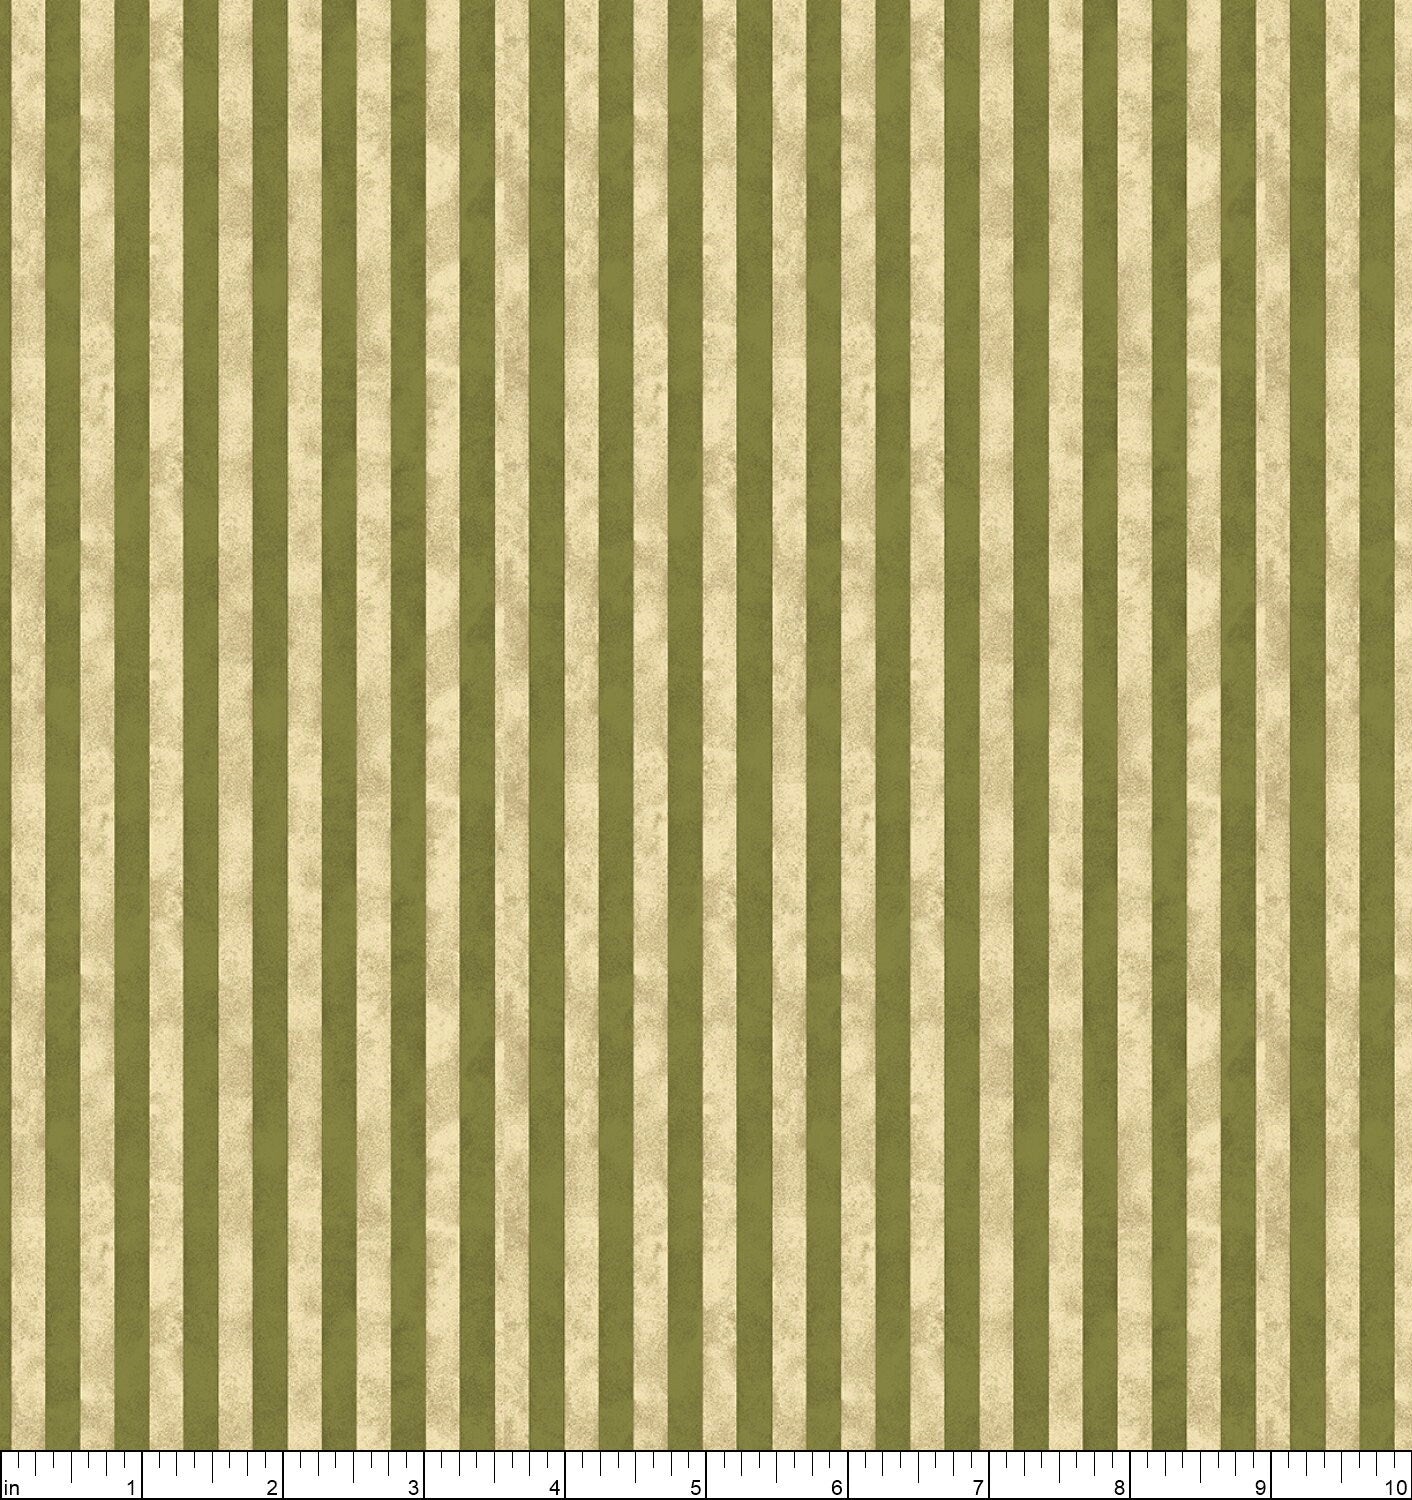 Benartex Winterberry Textured Stripe Green/Cream 9647-41